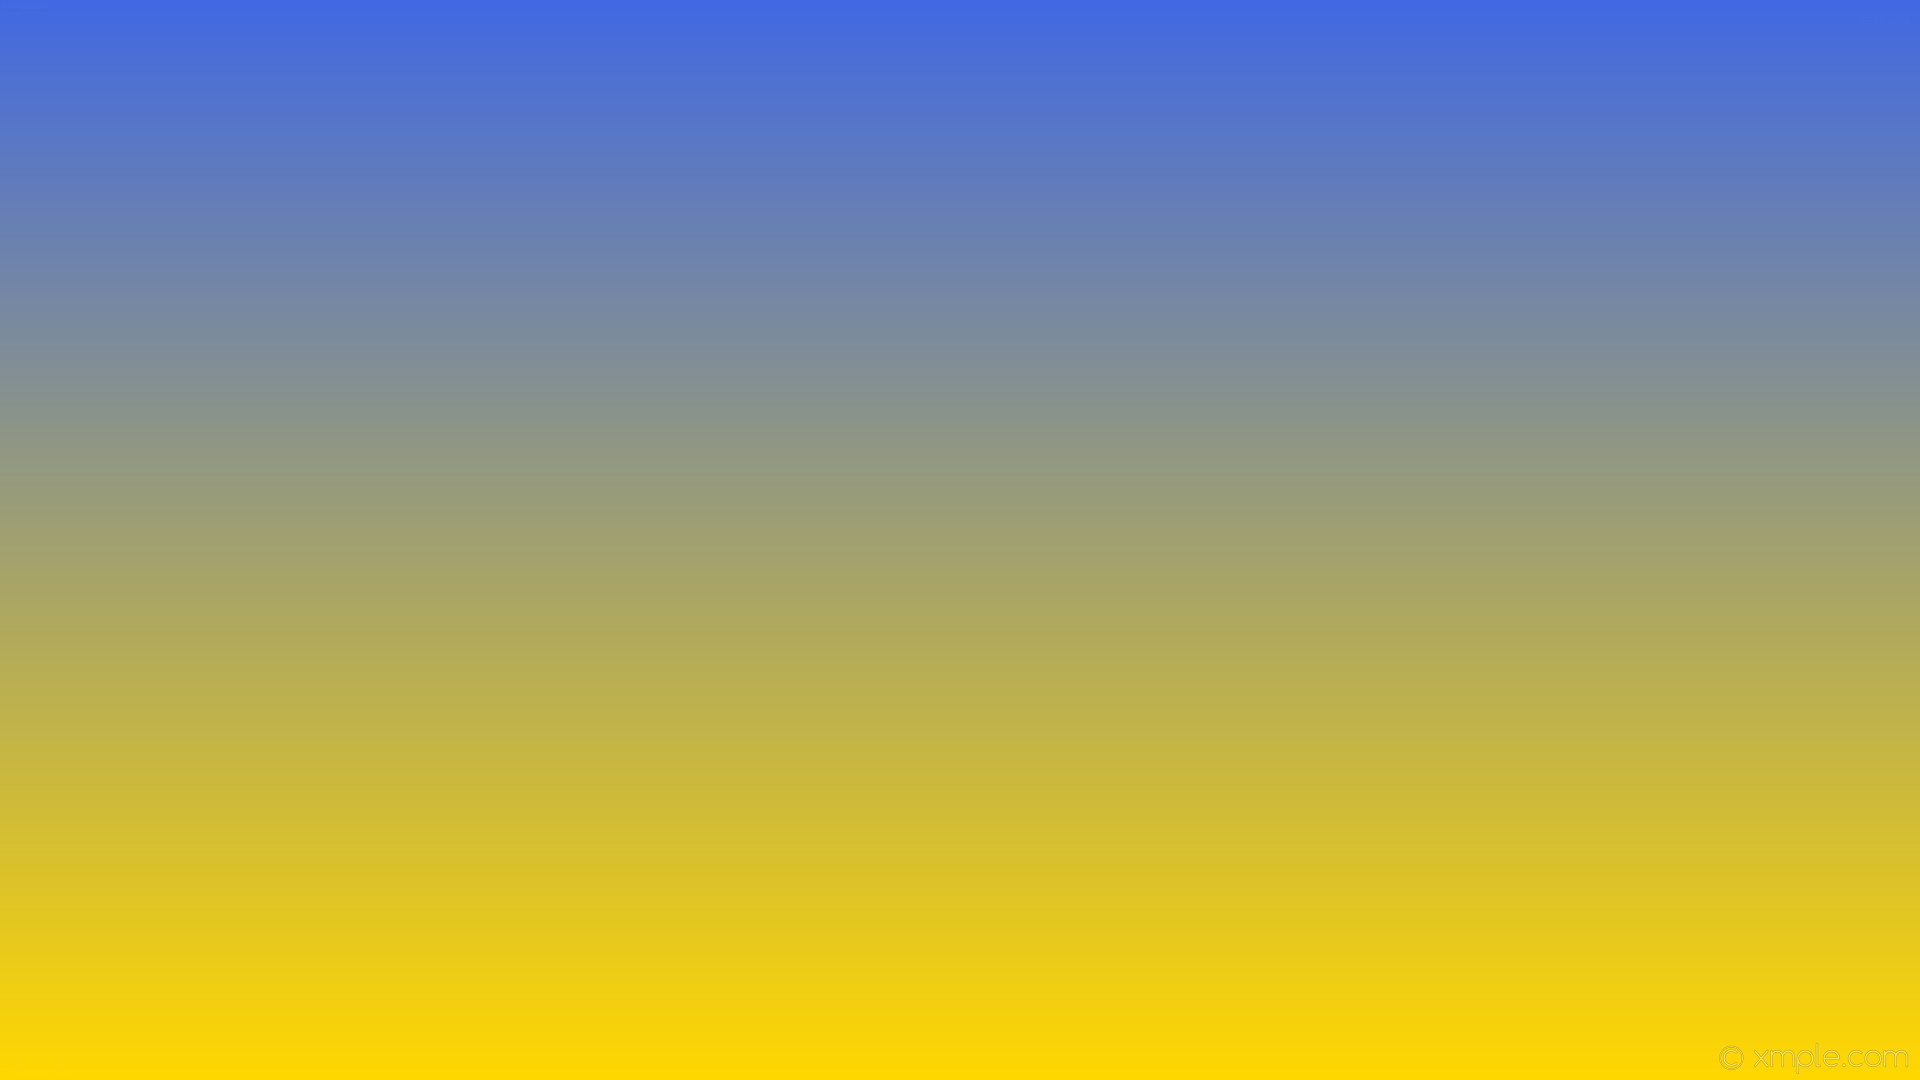 1920x1080 wallpaper linear yellow gradient blue gold royal blue #ffd700 #4169e1 270Â°